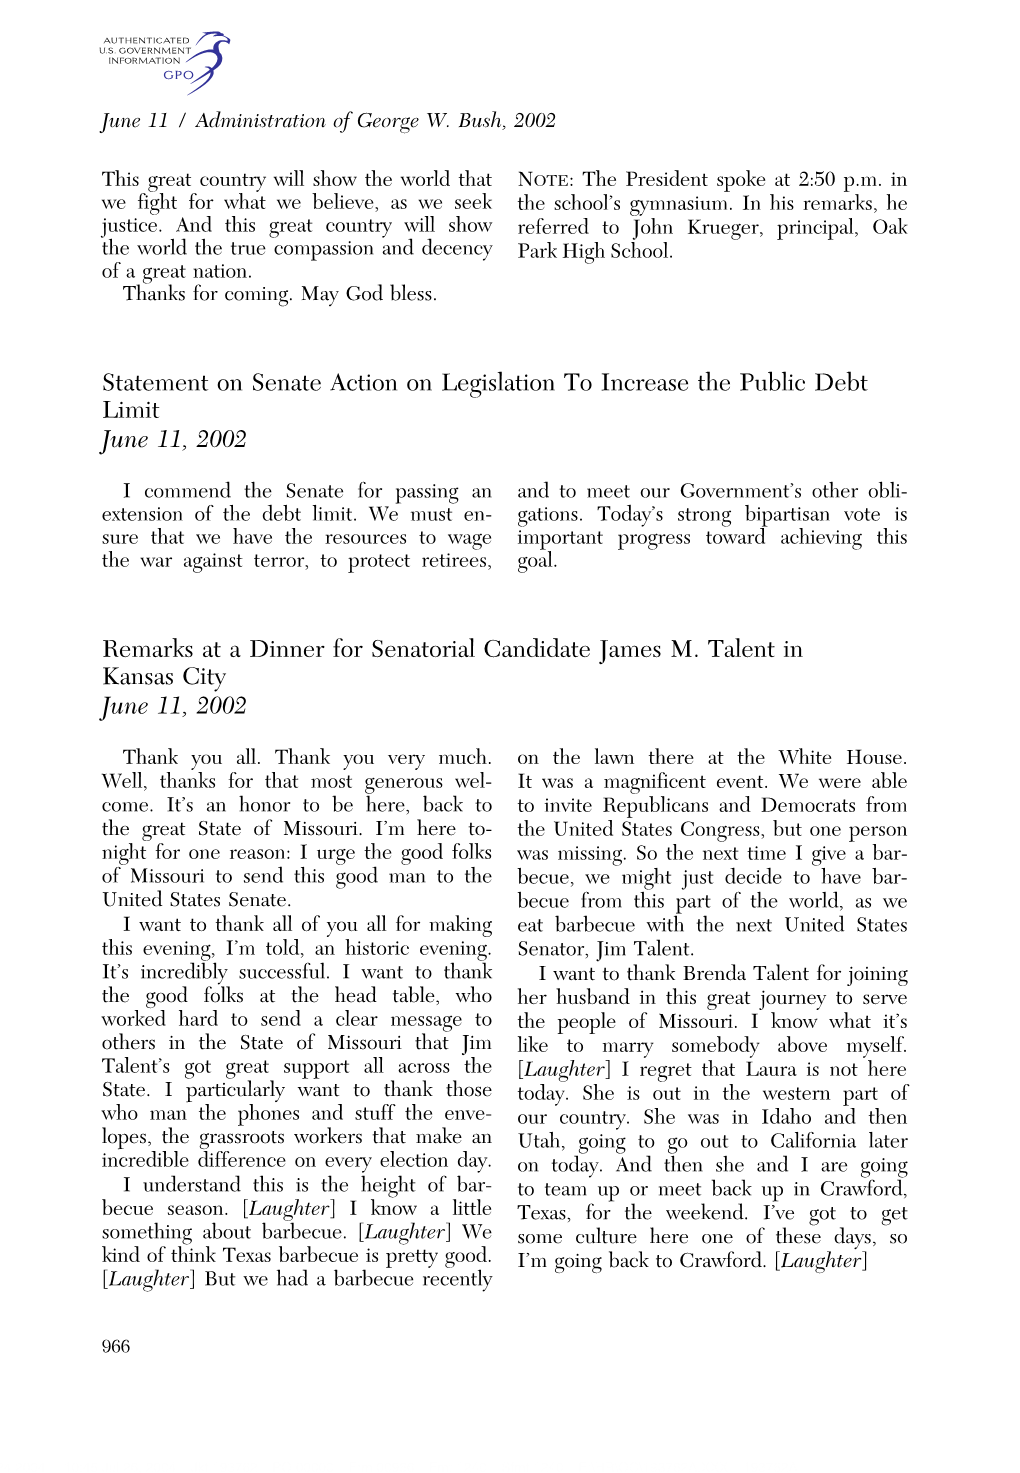 Statement on Senate Action on Legislation to Increase the Public Debt Limit June 11, 2002